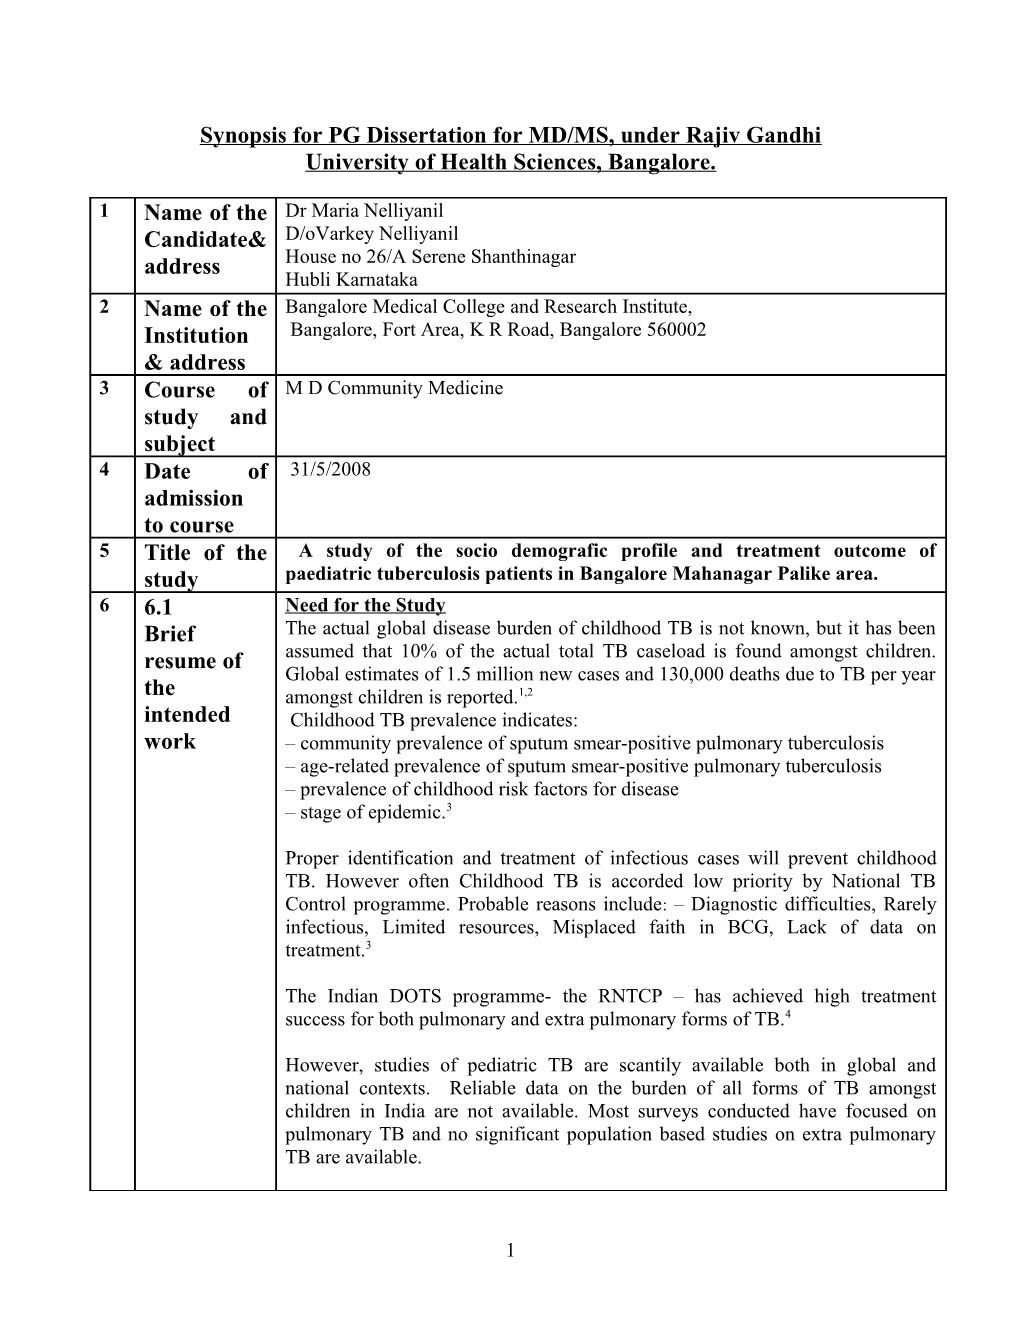 Synopsis for PG Dissertation for MD/MS, Under Rajiv Gandhi University of Health Sciences